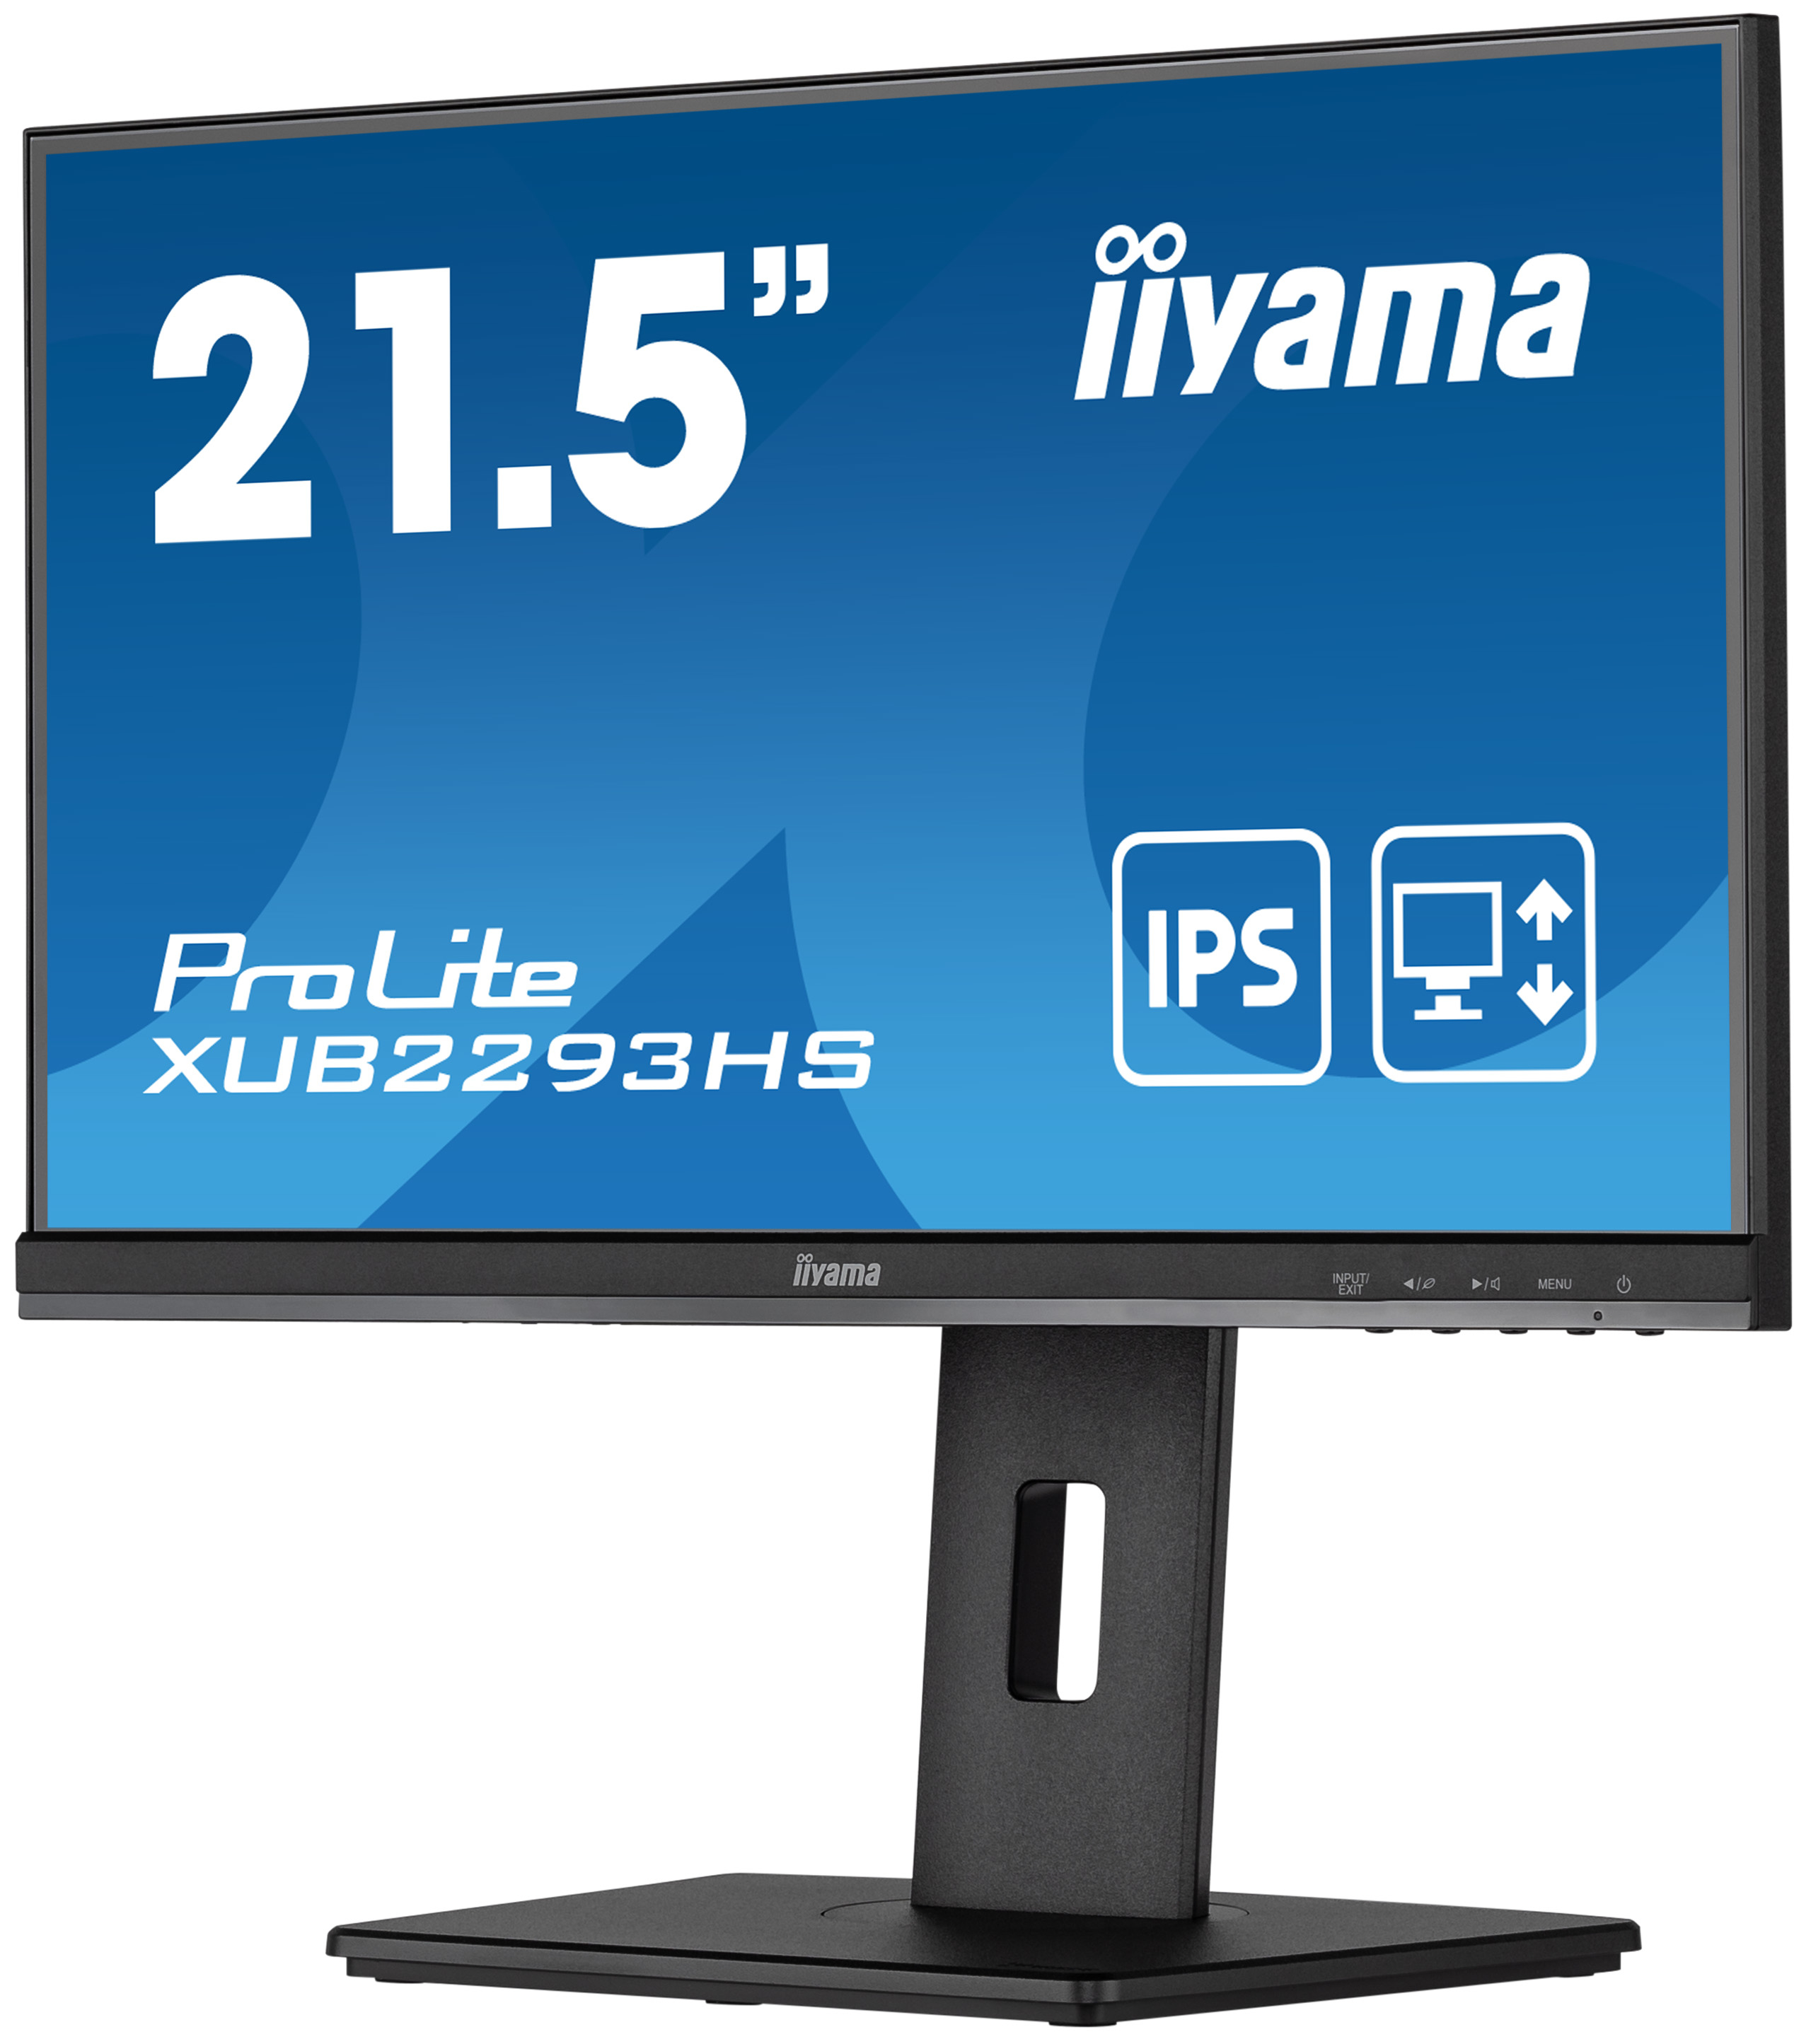 Iiyama - Monitors                Prolite Xub2293hs-b5 21.5in Ete     Ips 1920x1080 250cd/qm 3ms Speak    Xub2293hs-b5